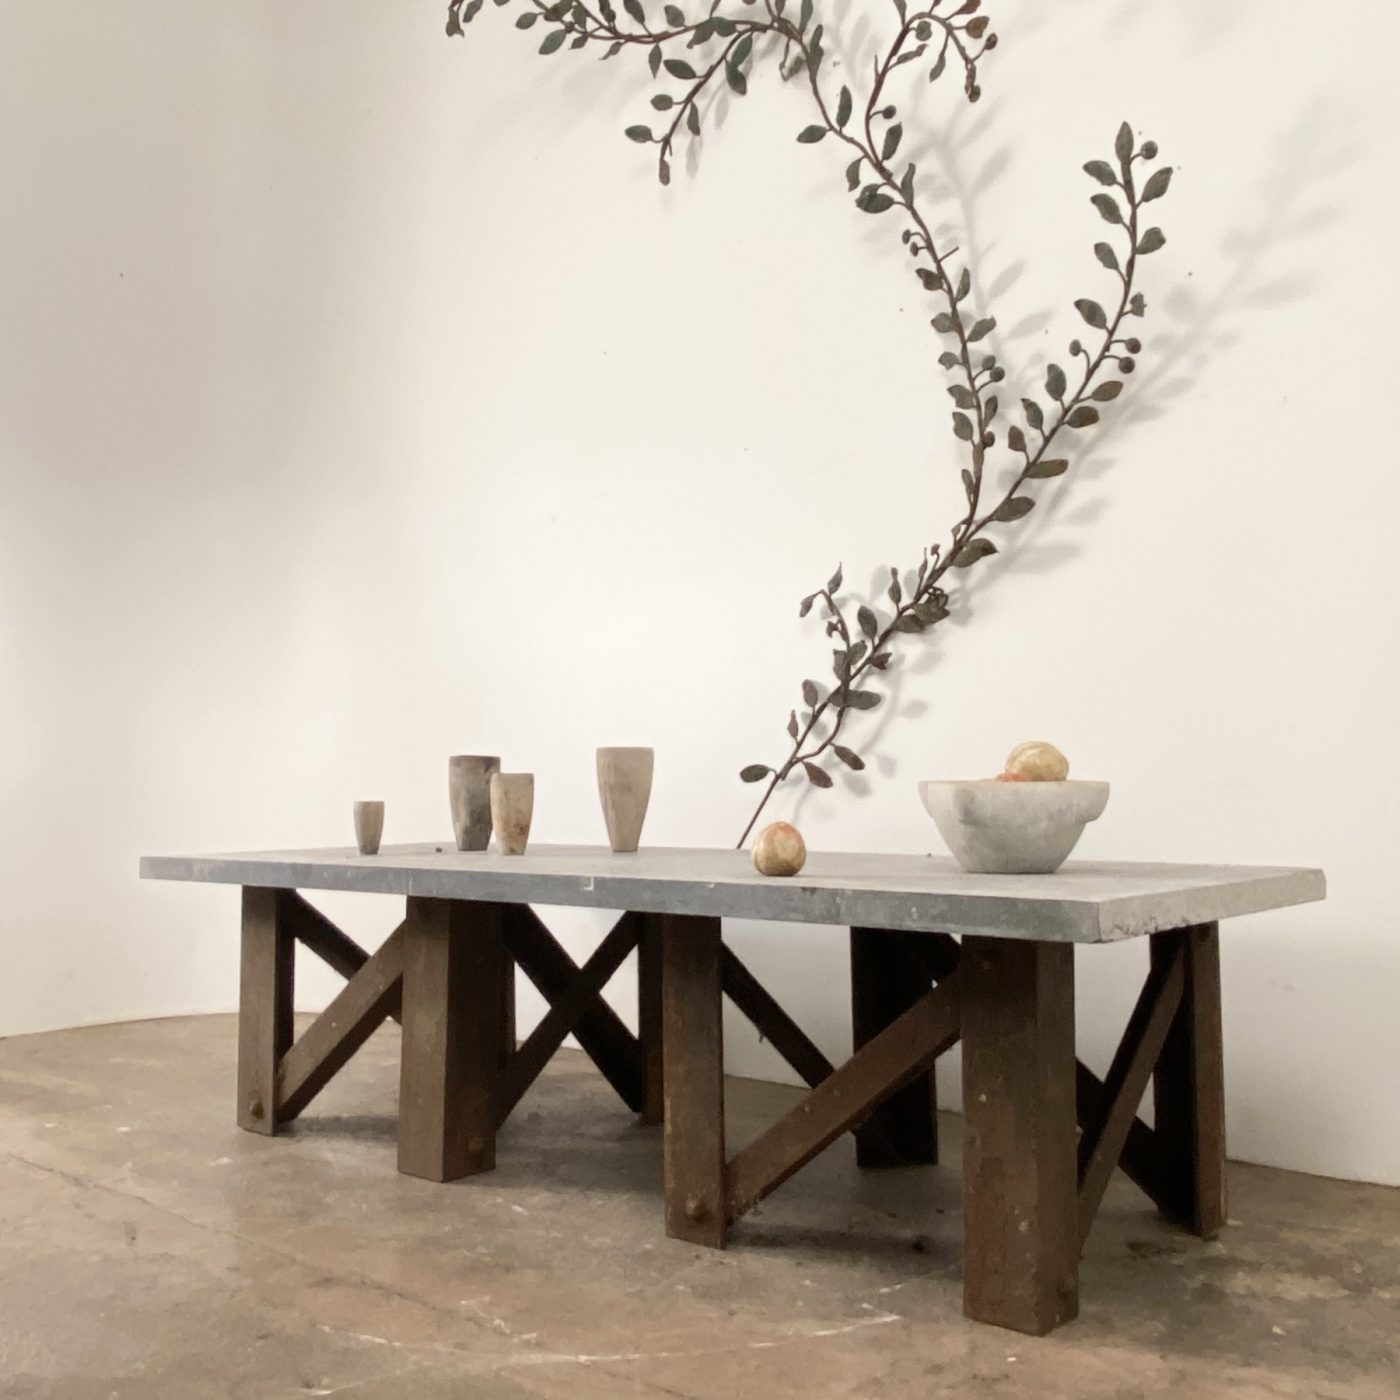 objet-vagabond-stone-coffee-table0001